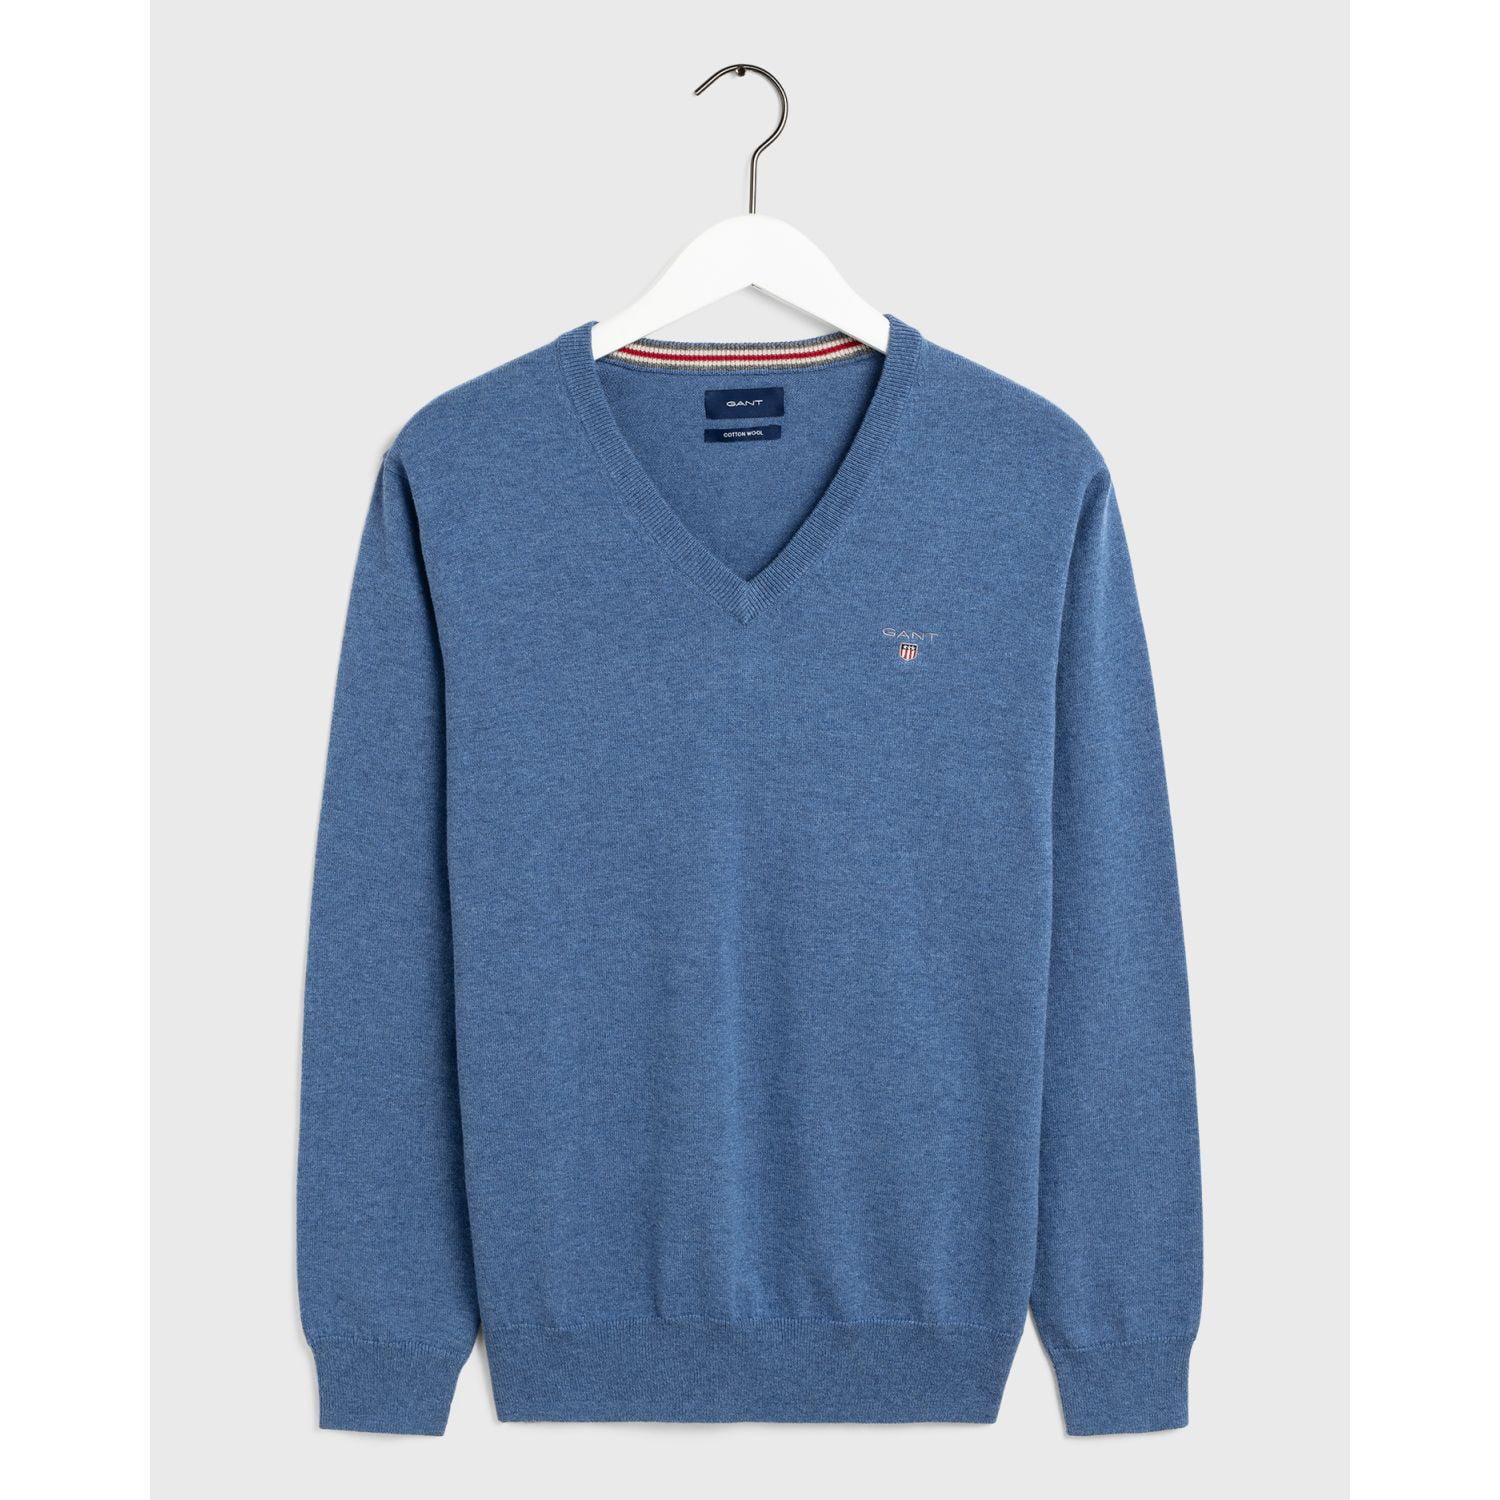 Gant Men's Cotton Wool V-Neck Sweater, Medium, Blue Melange - Walmart.com